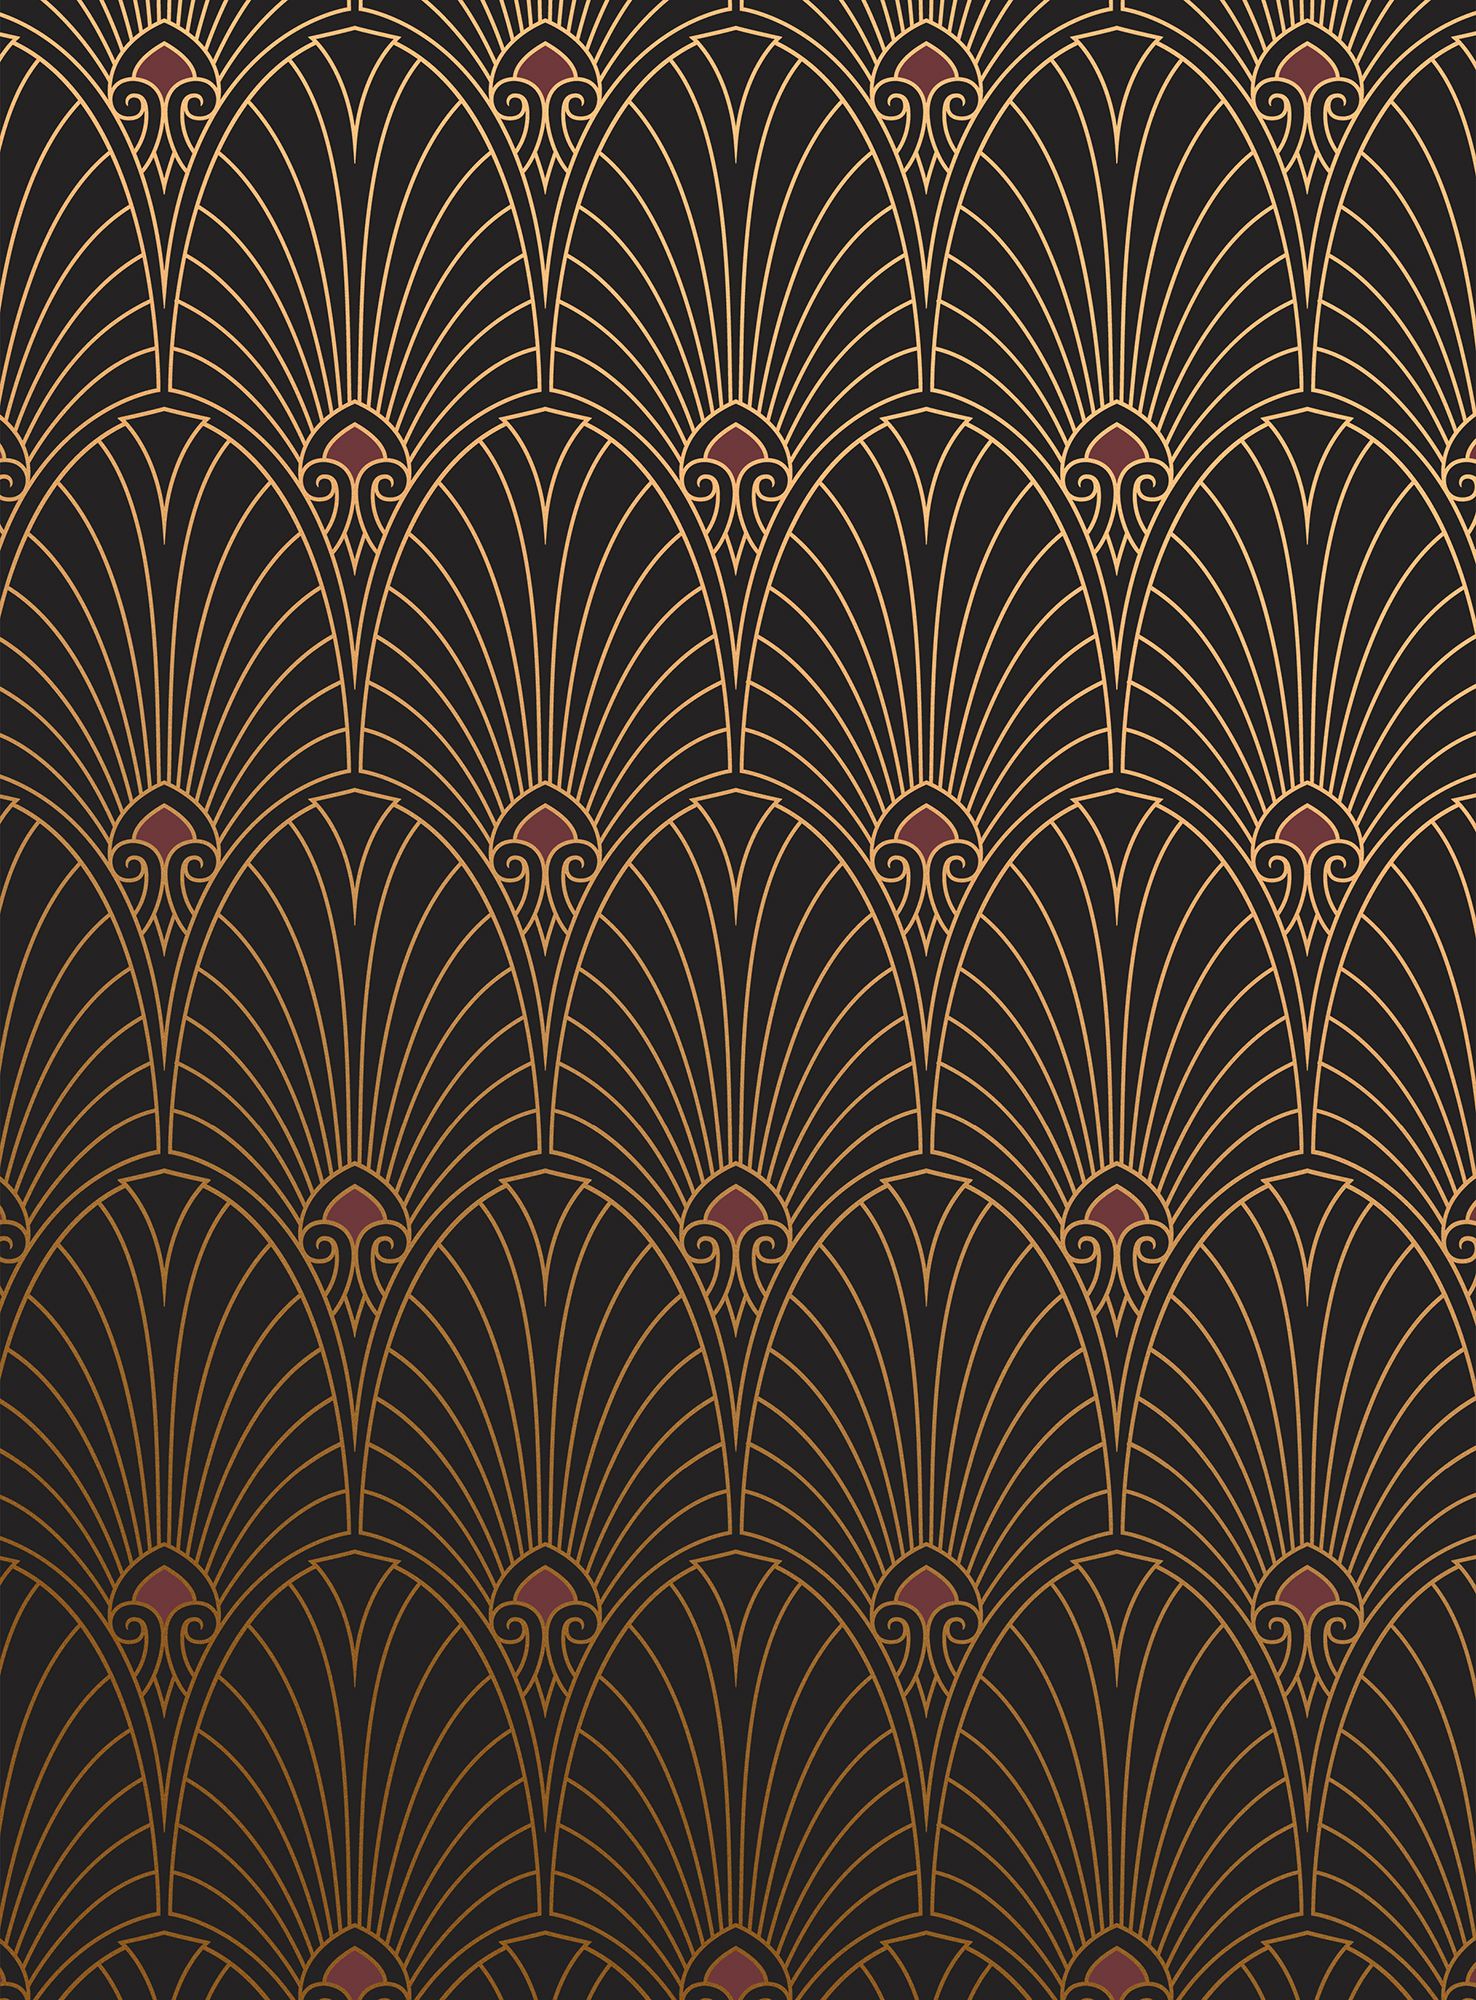 Buy Art Deco Wallpaper Art Nouveau Wallpaper Geometric Online in India   Etsy